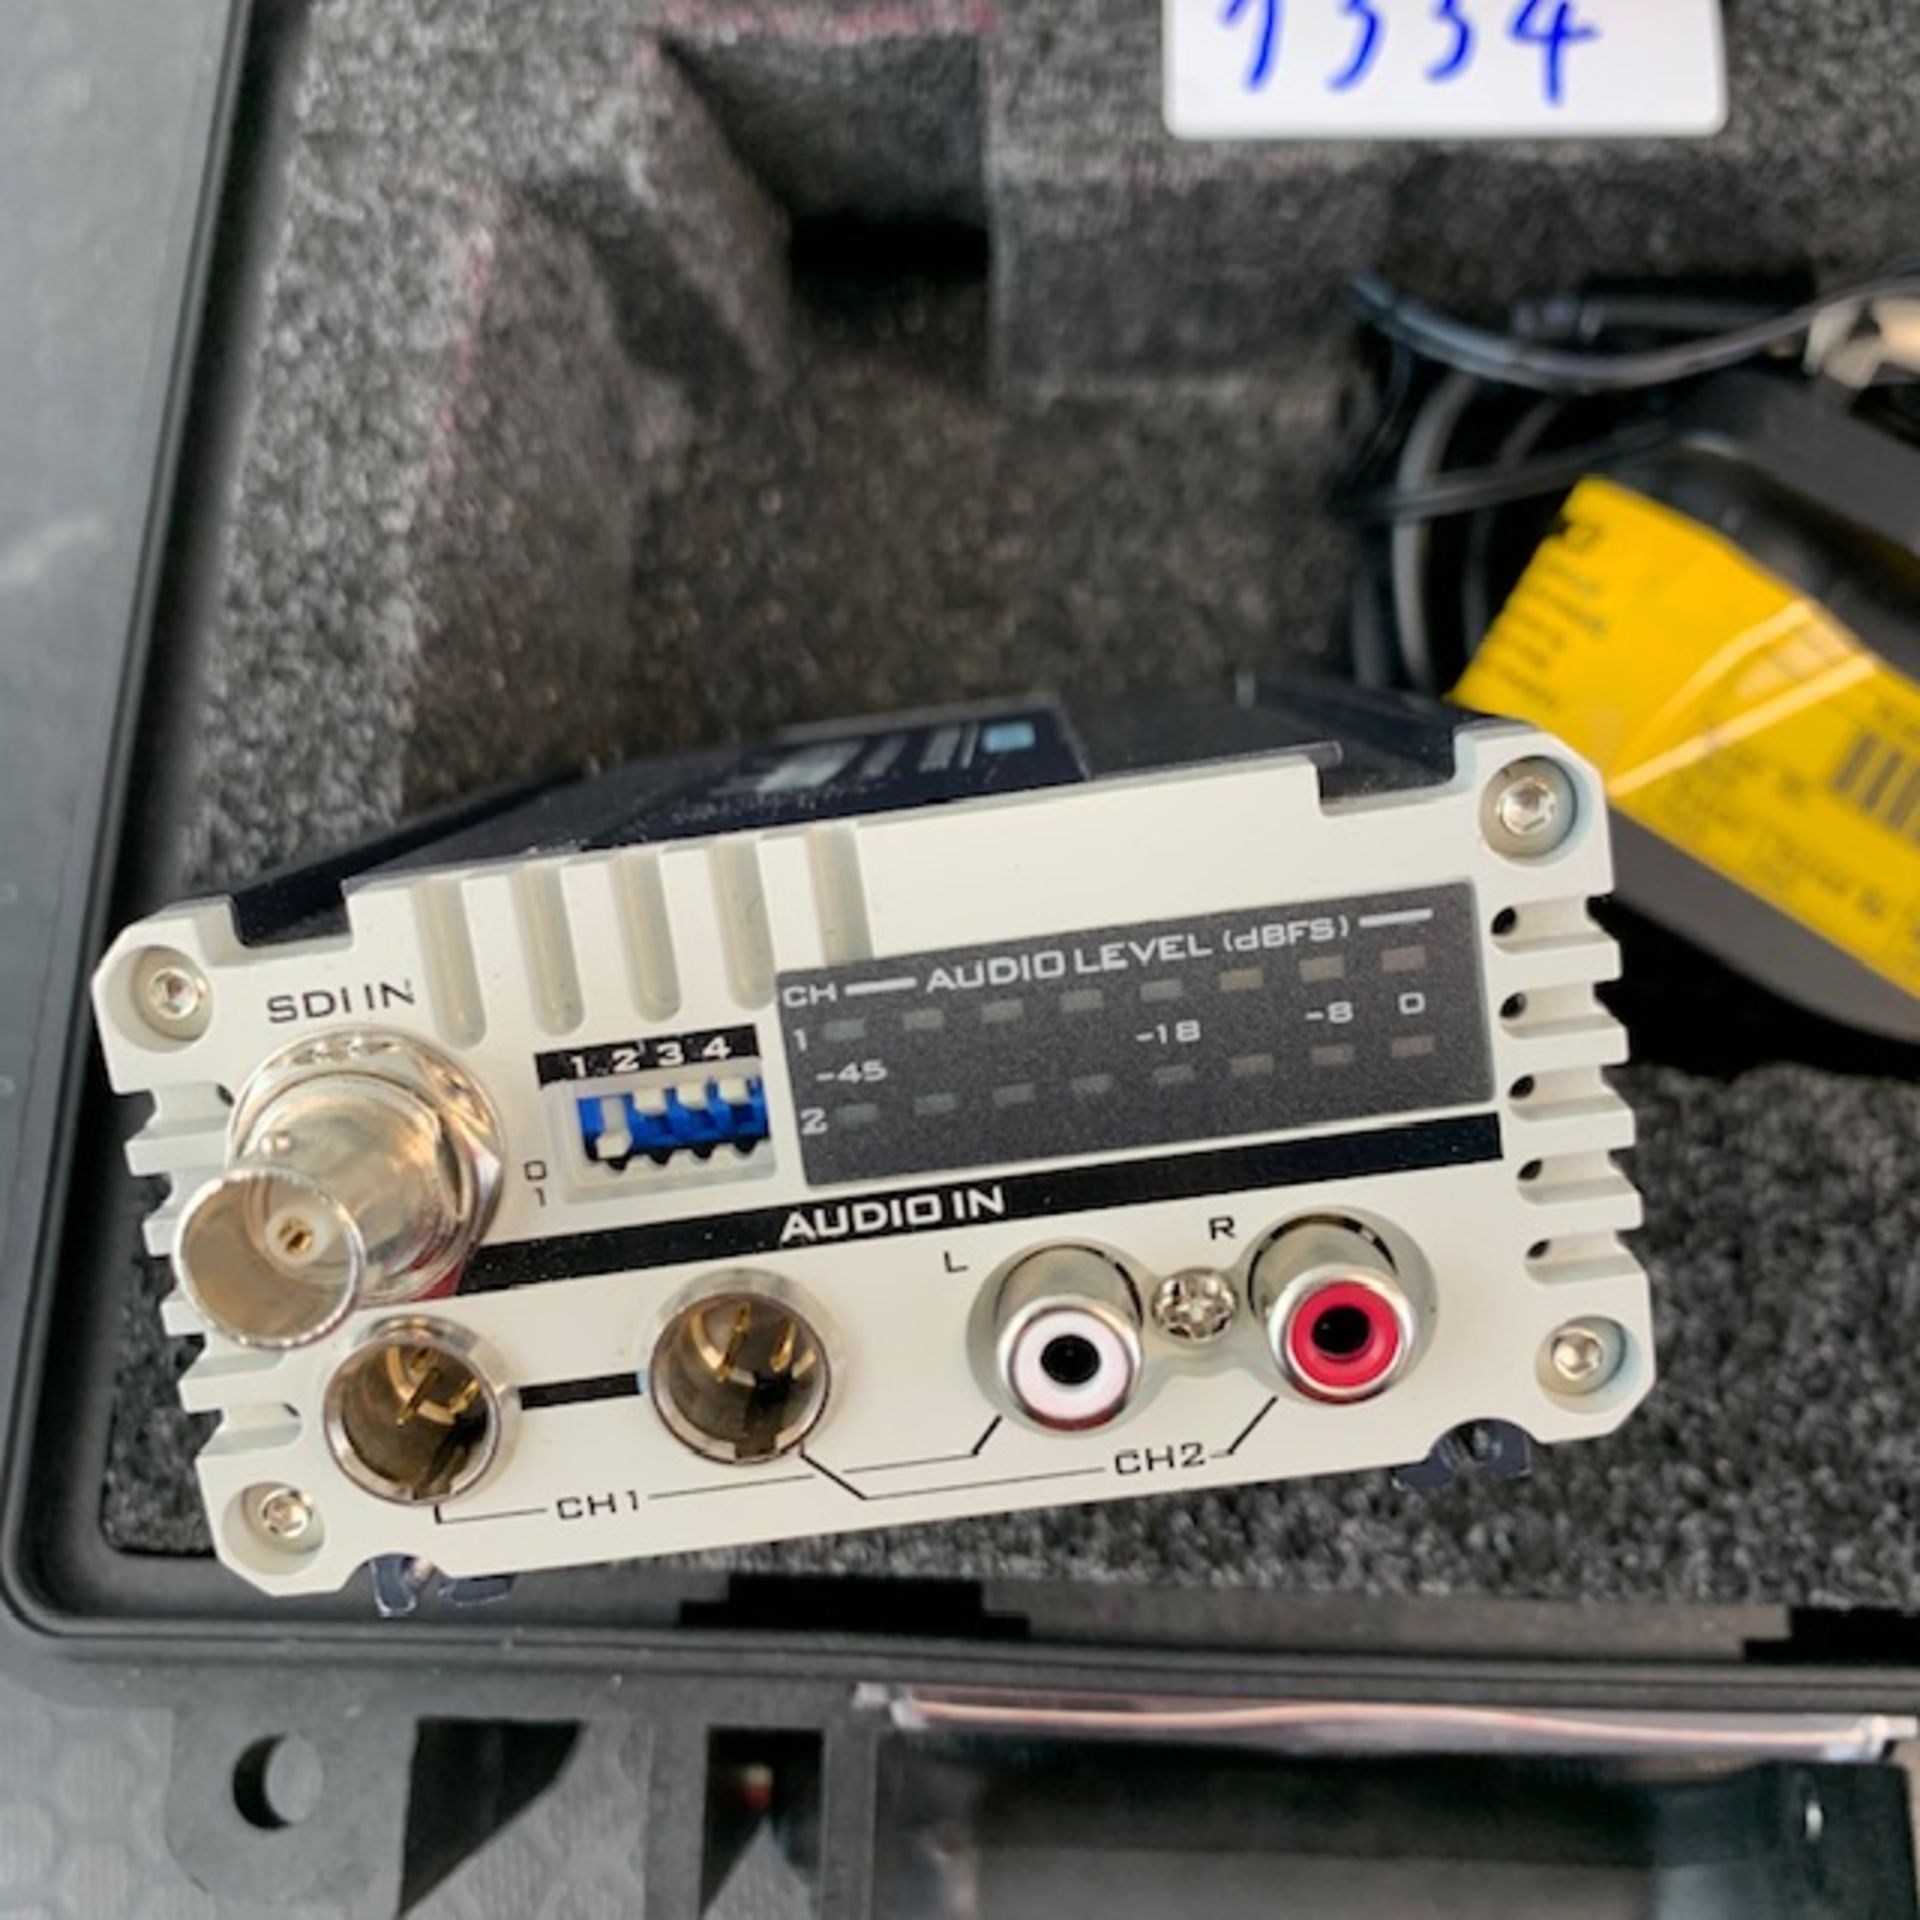 1 X Datavideo DAC-91 Sdi Audio Embedder In Stagg Case - Ref: 1334 - CL581 - Location: Altrincham - Image 3 of 3